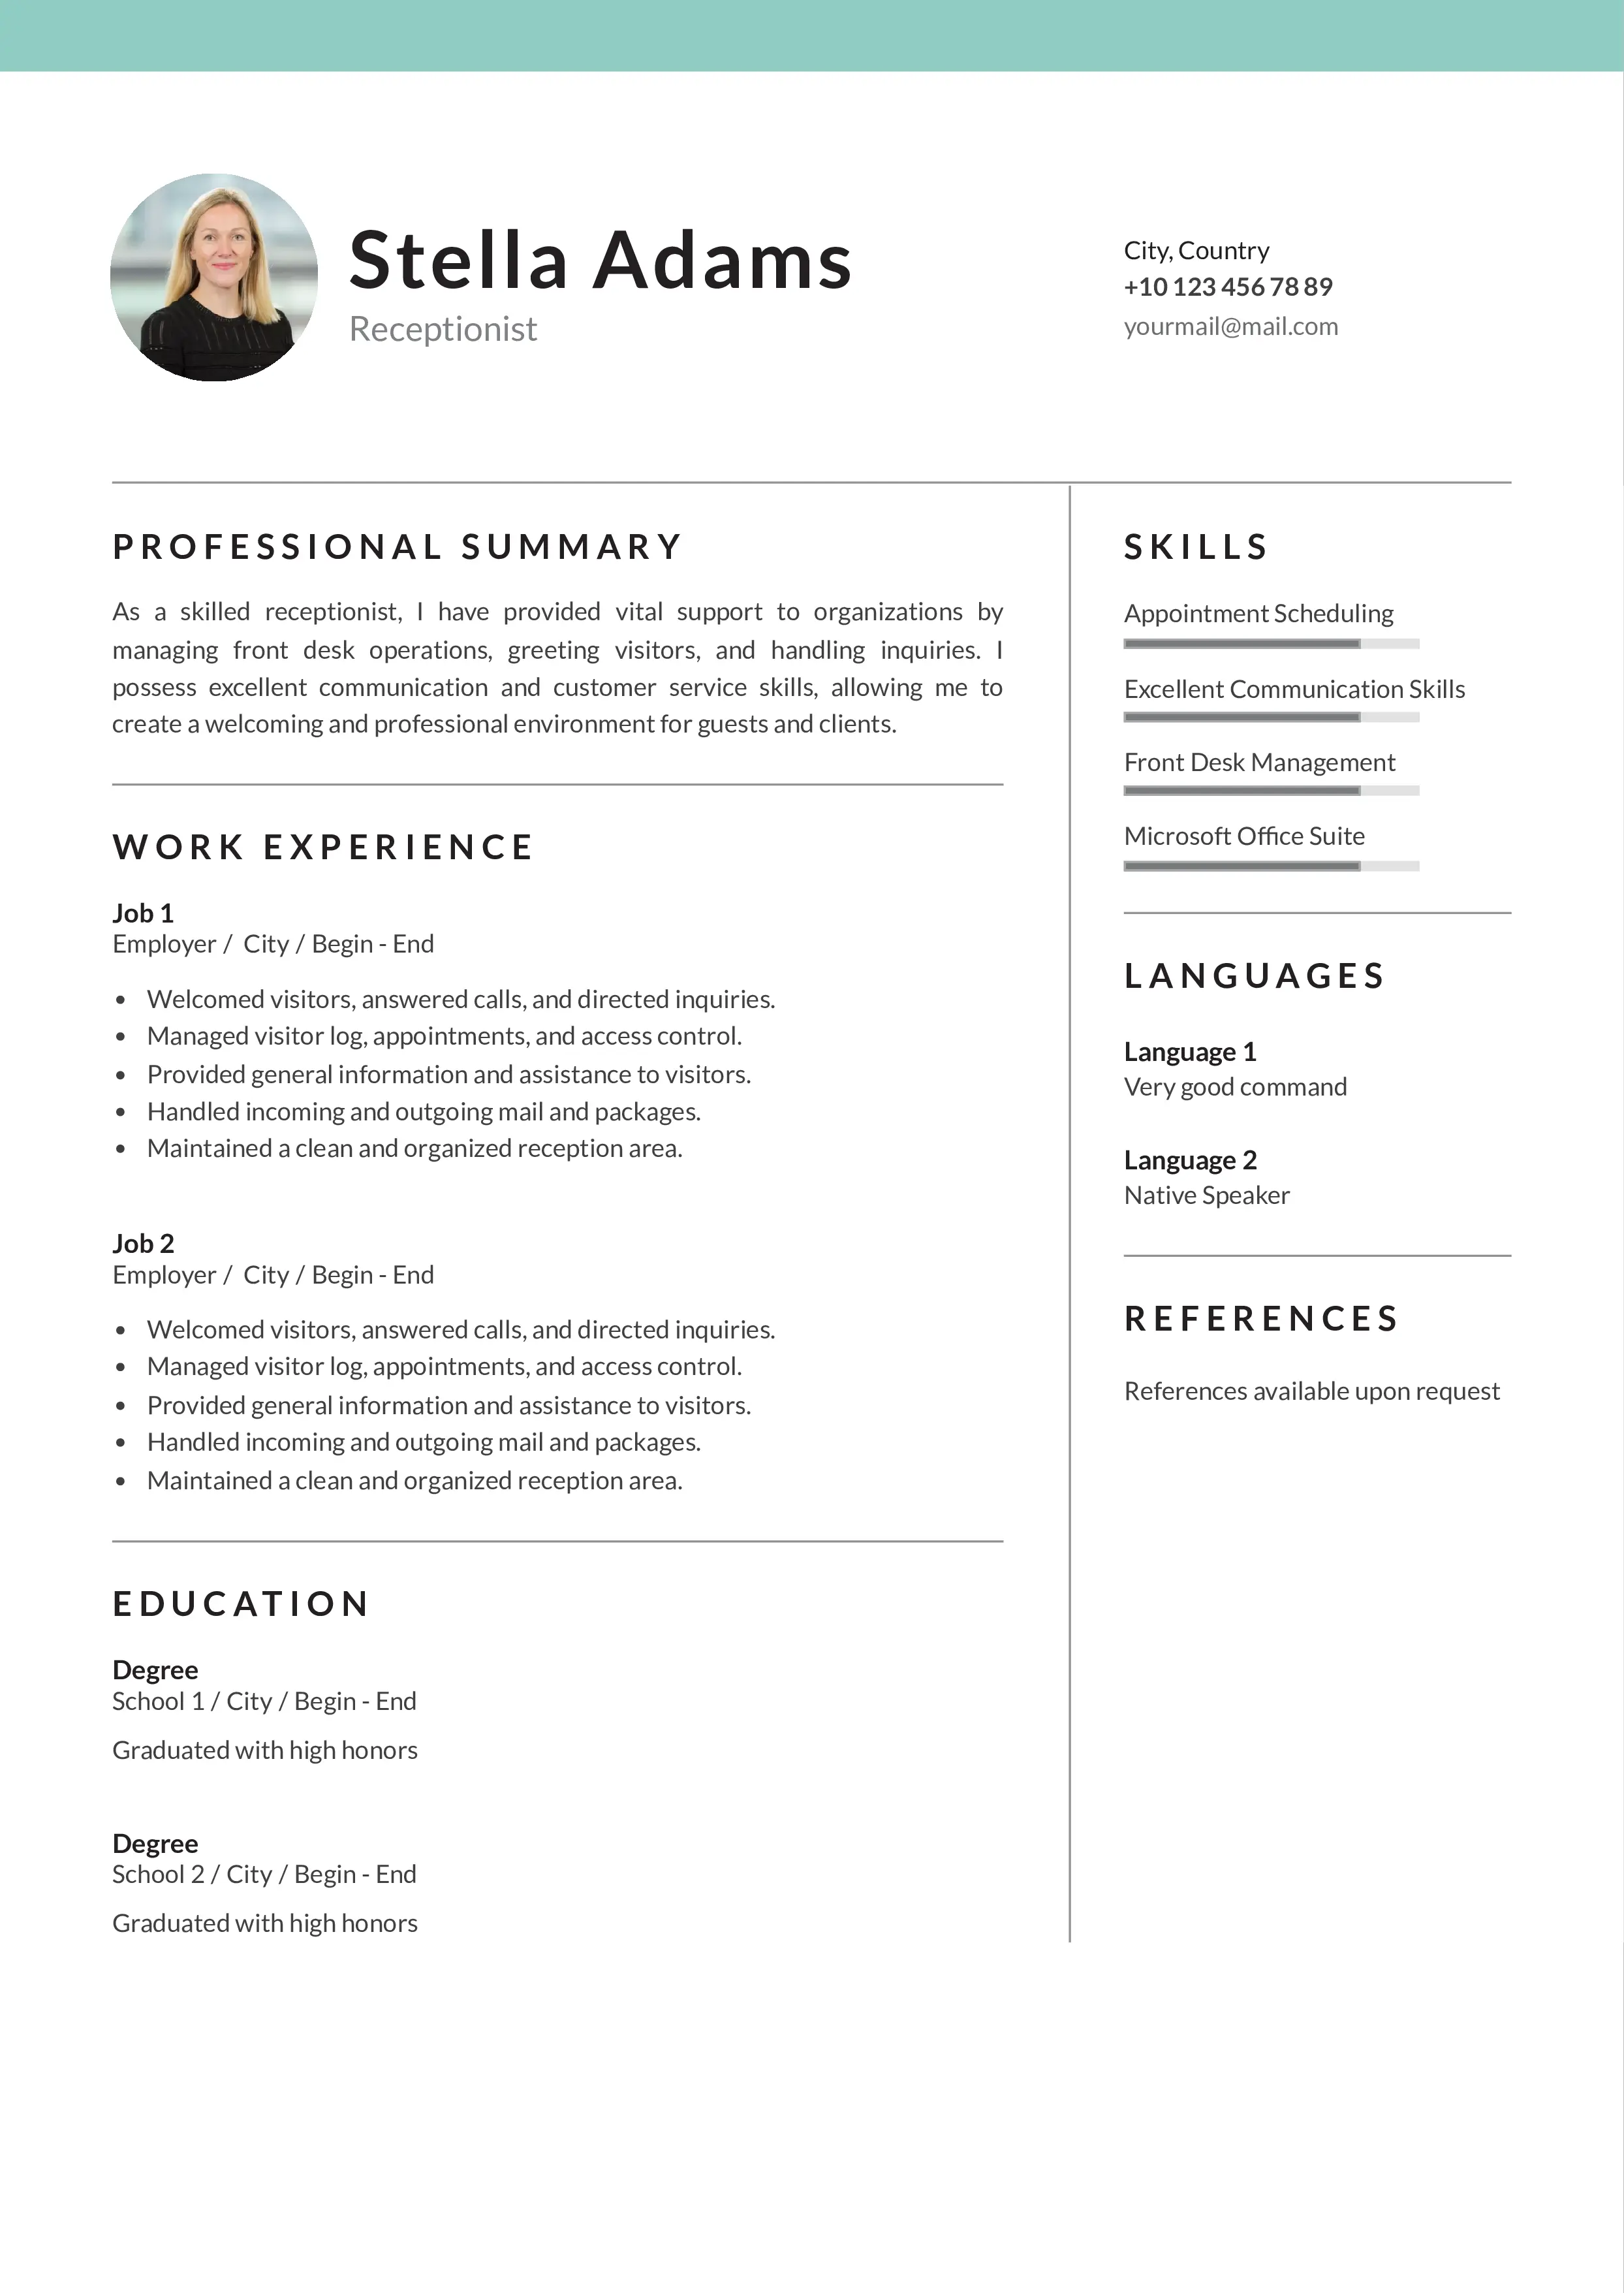 Receptionist resume CV